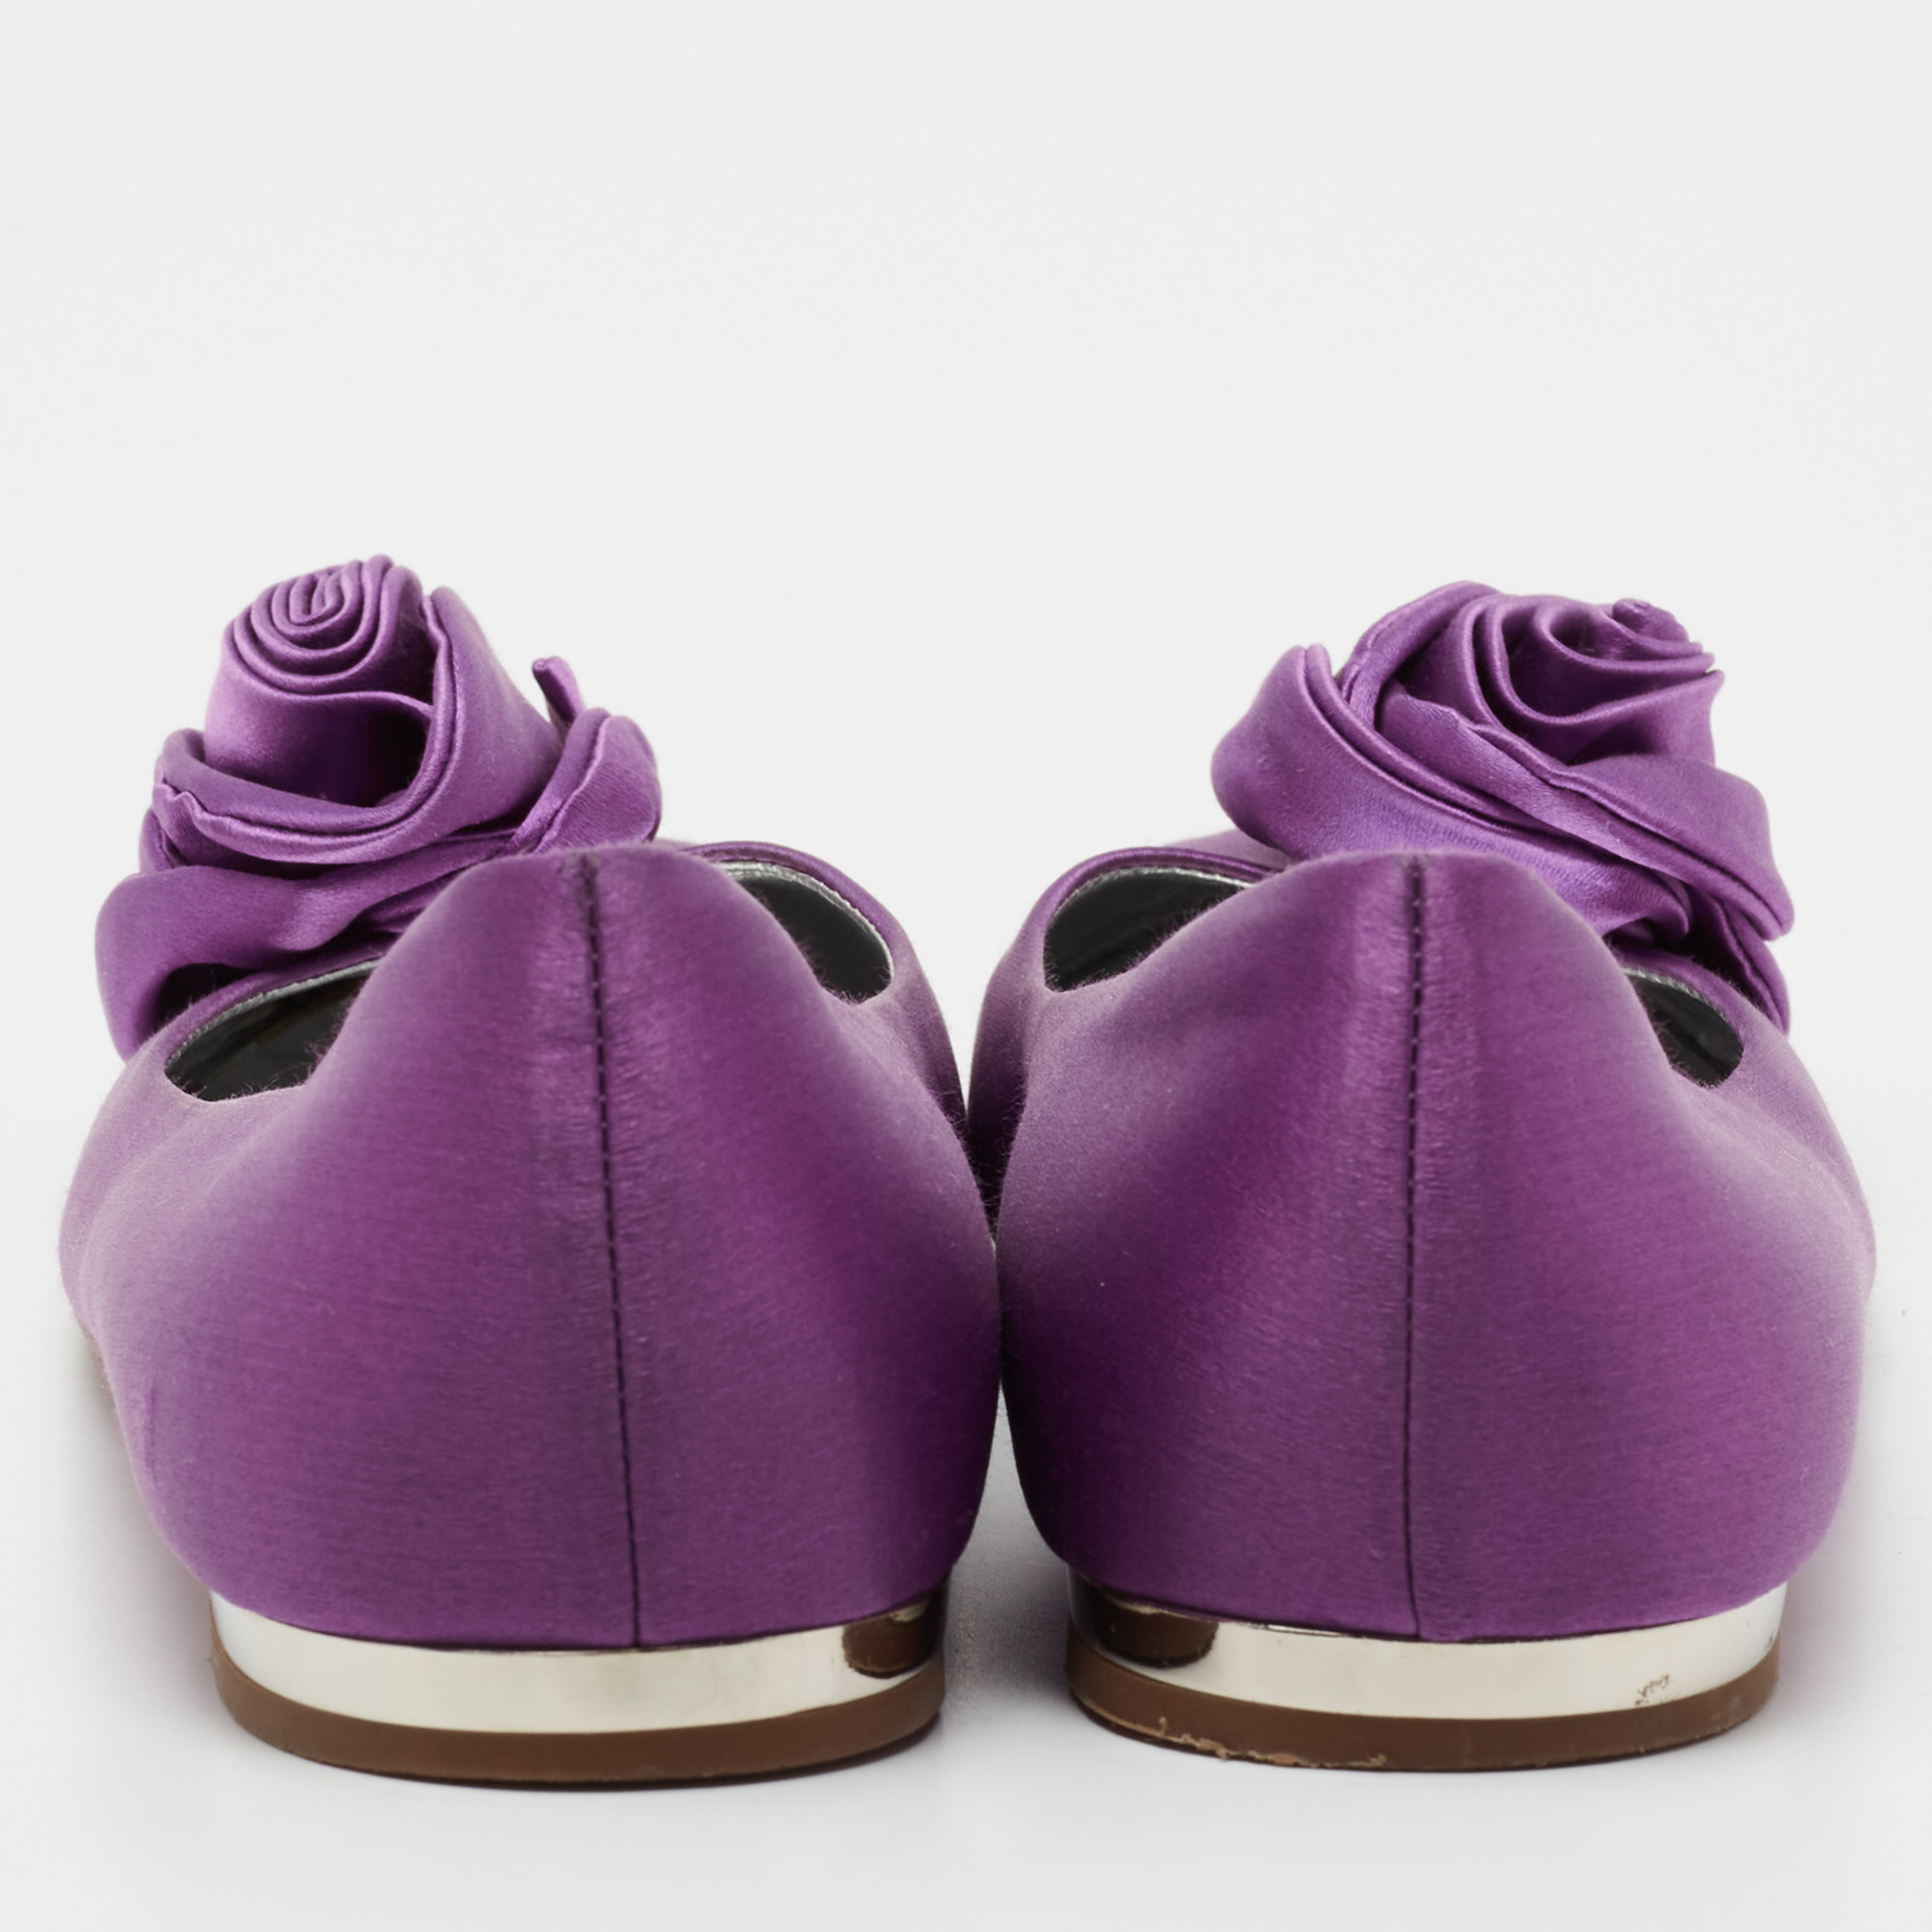 Giuseppe Zanotti Purple Satin Flower Applique Ballet Flats Size 37.5